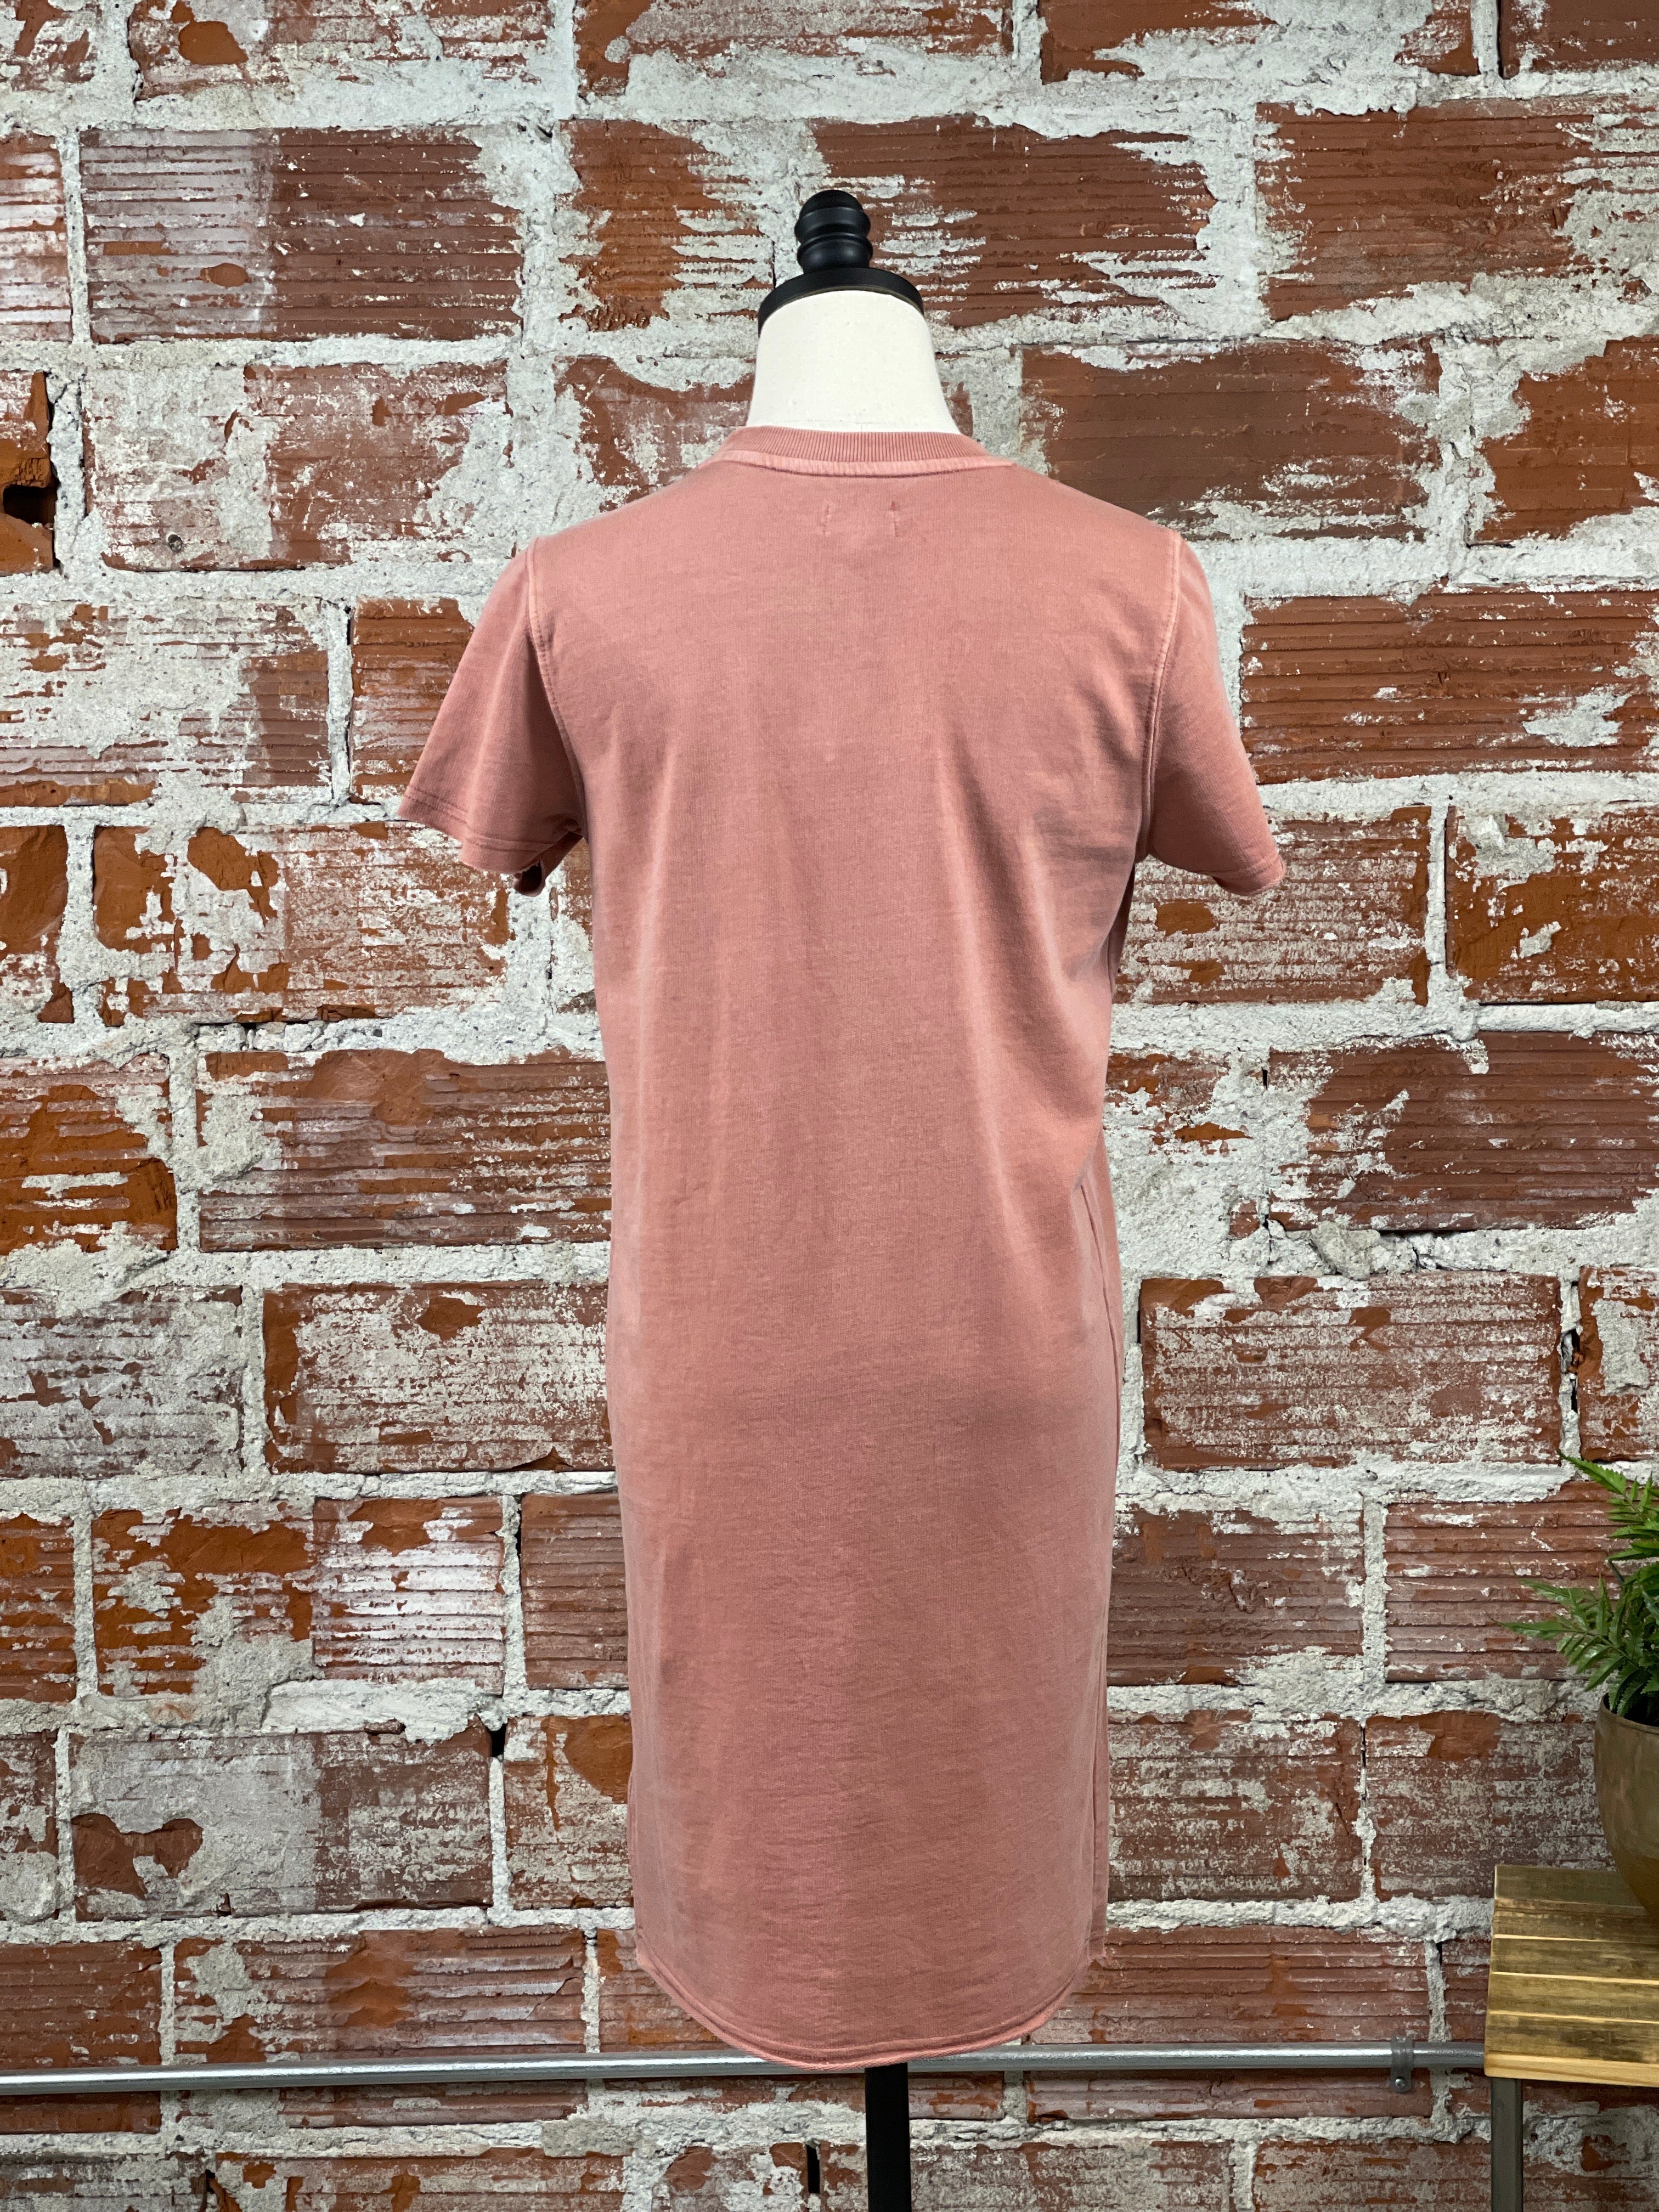 Thread & Supply Raiya Dress in Rose Tan-151 Dresses - Short-Little Bird Boutique